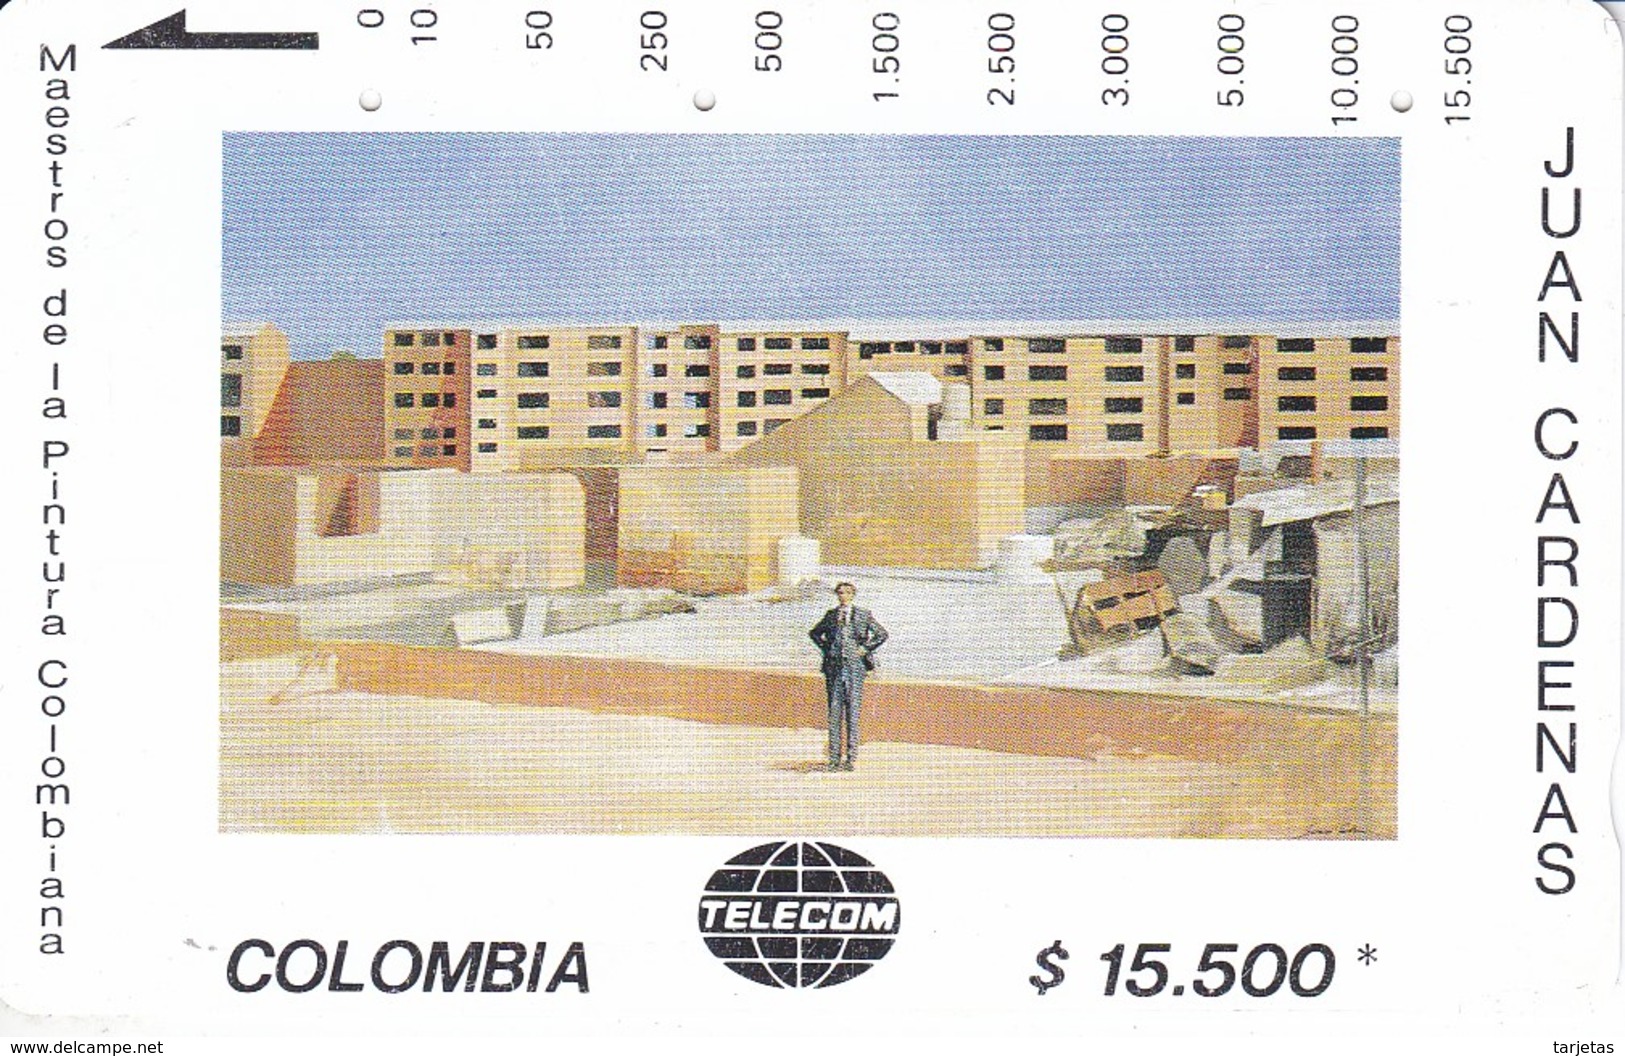 TARJETA DE COLOMBIA DE TELECOM DE $5500 MAESTROS DE LA PINTURA (JUAN CARDENAS) EDIFICIO - Kolumbien